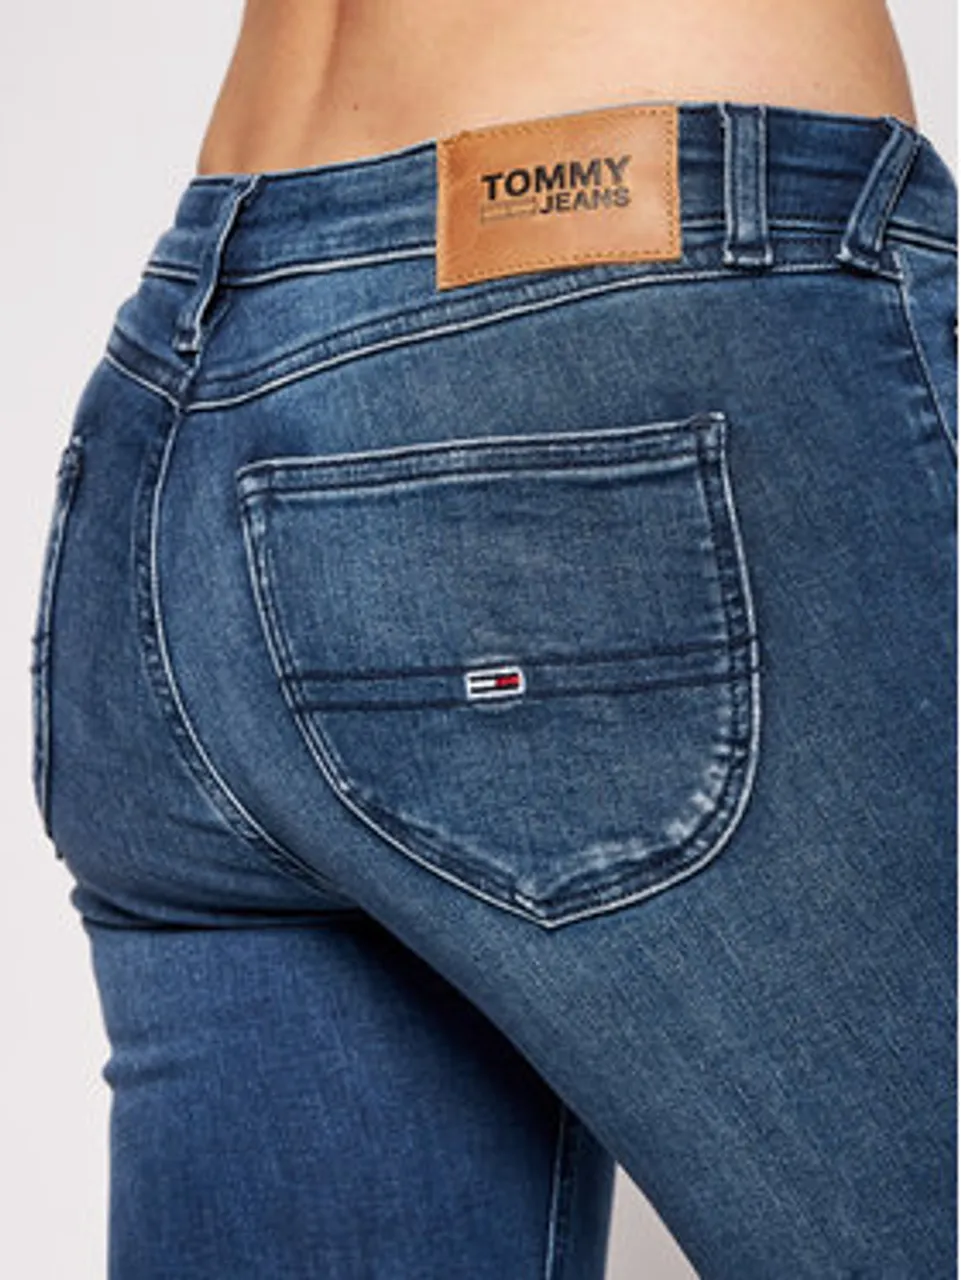 Tommy Jeans Jeans Sophie DW0DW09214 Dunkelblau Skinny Fit